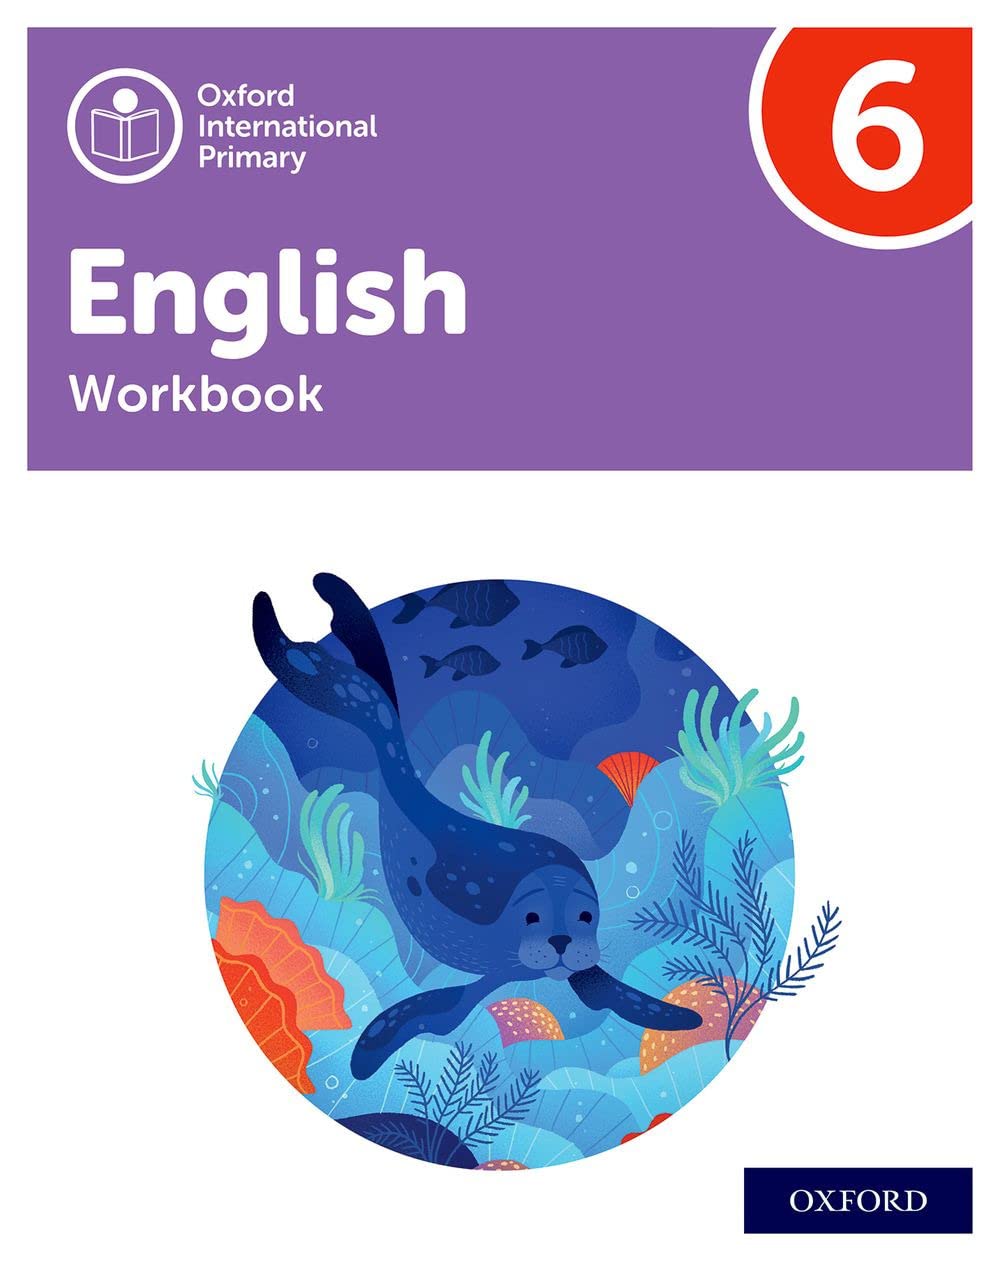 Oxford International Primary English Workbook - 6